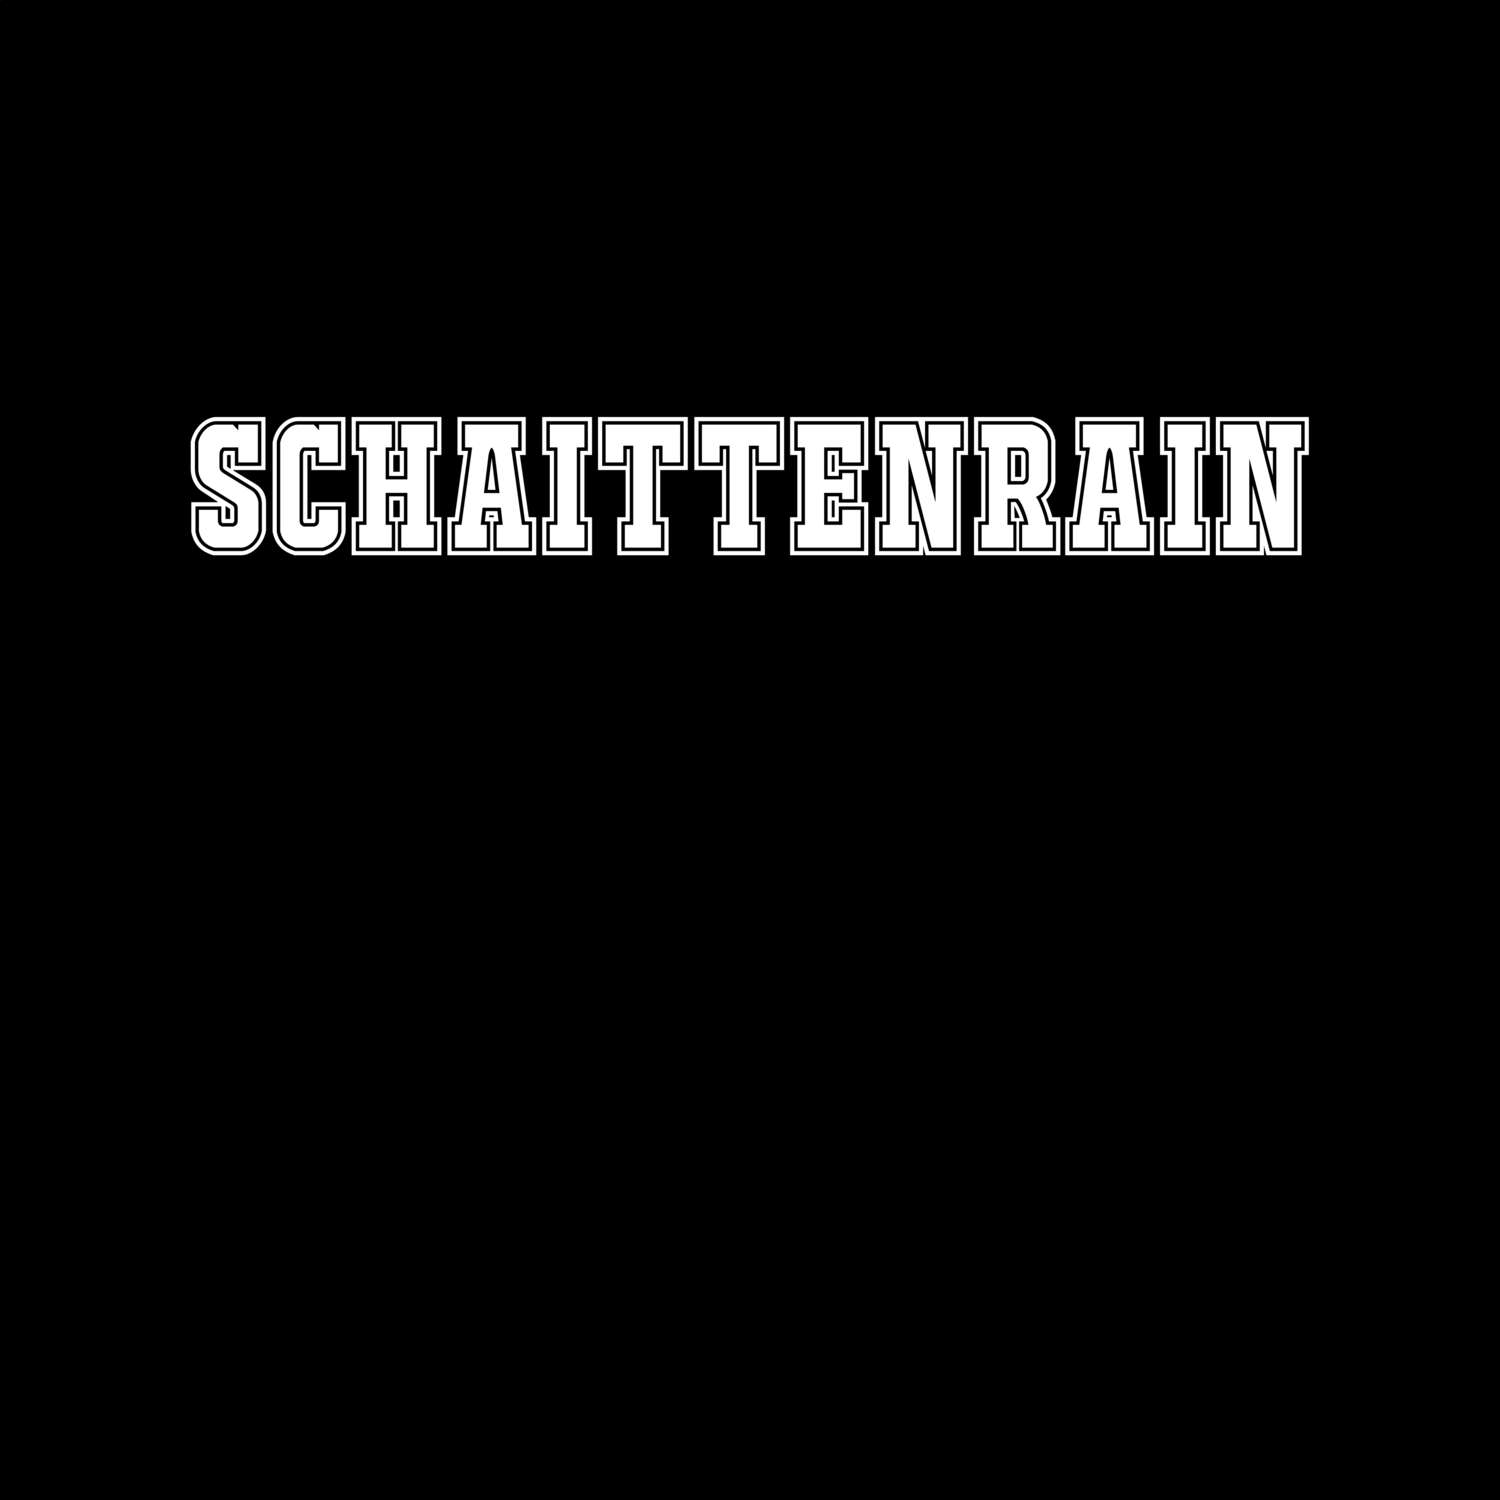 Schaittenrain T-Shirt »Classic«